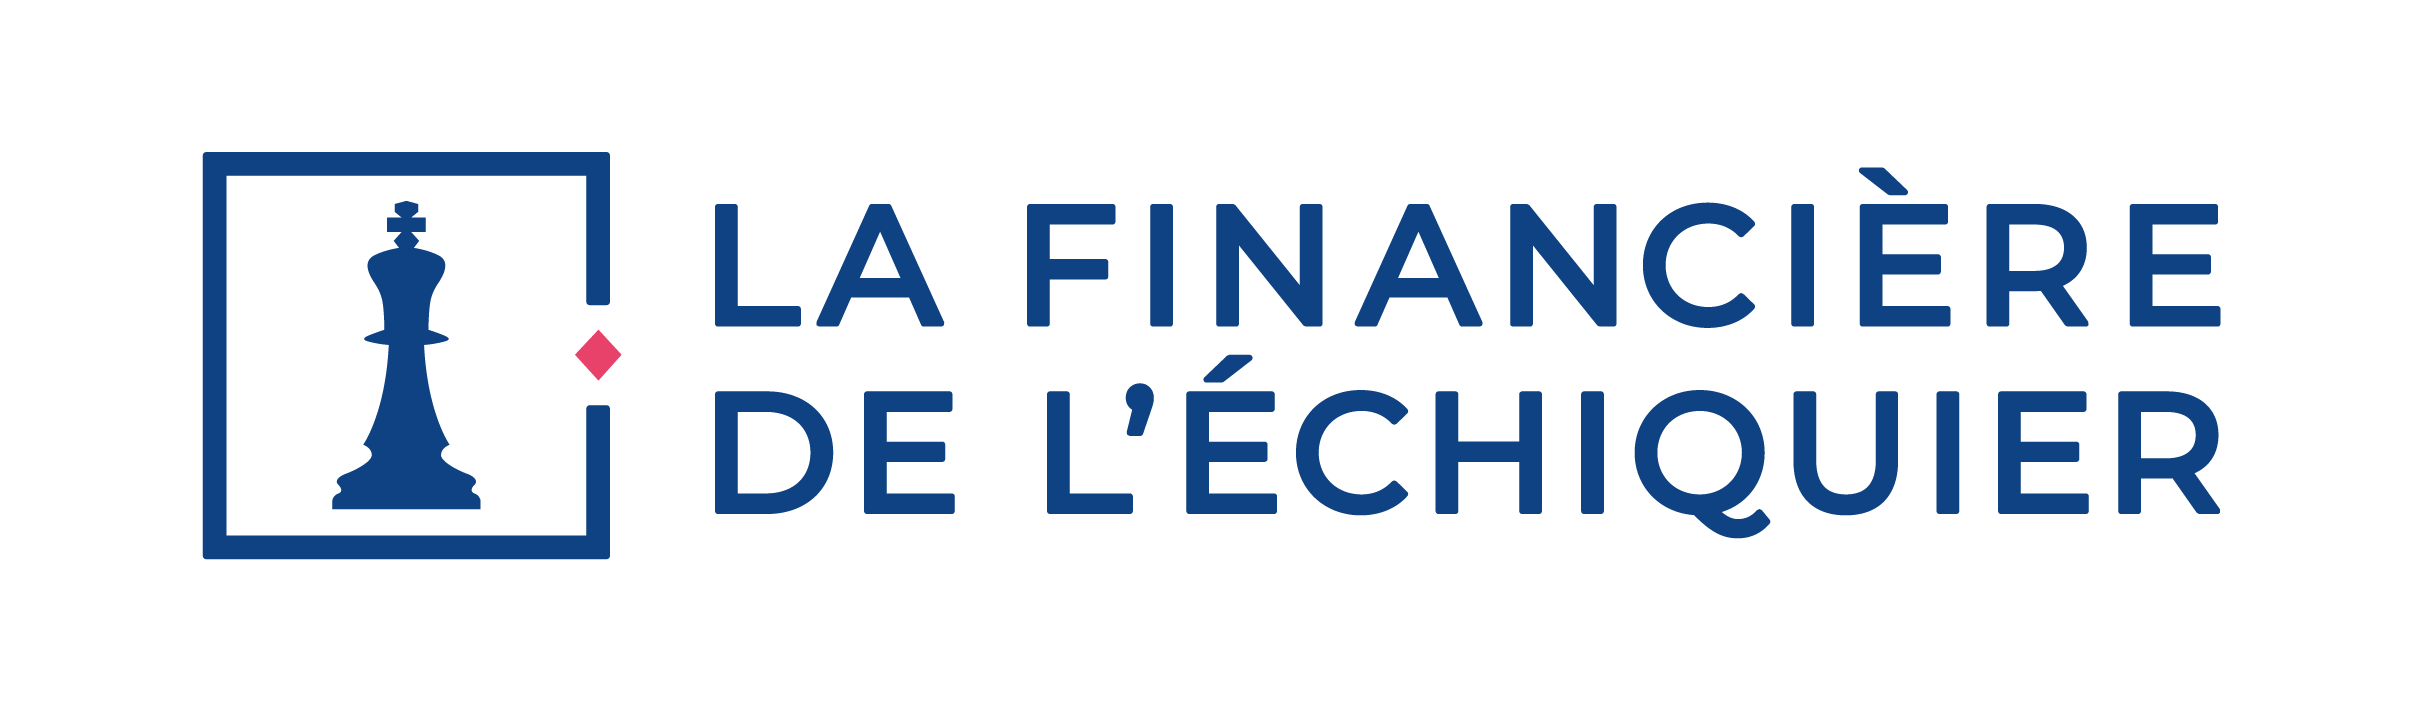 Logótipo da marca La Financière de L'Échiquier